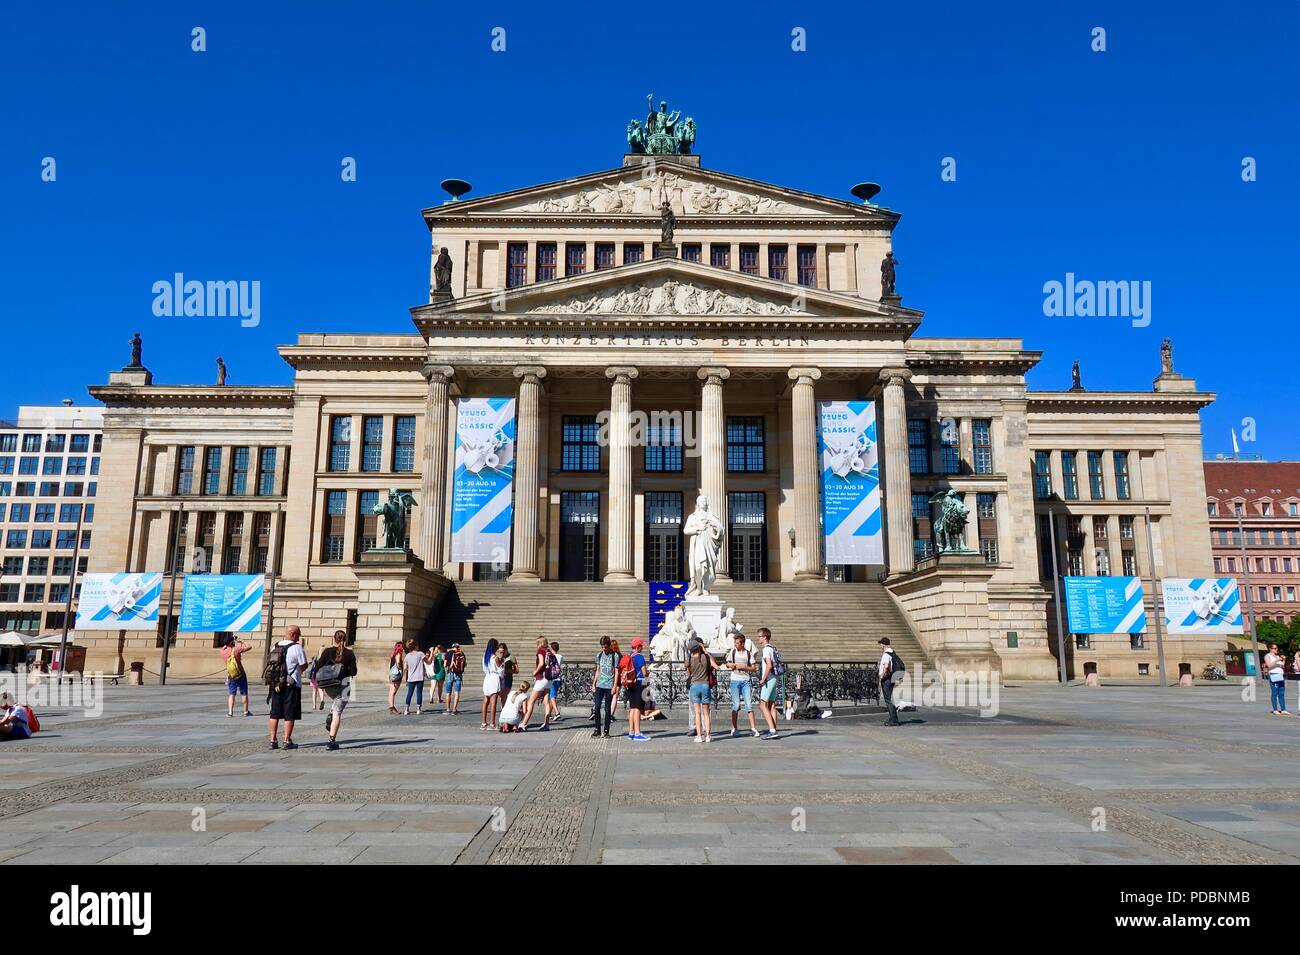 Konzerthaus at the Gendarmenmarkt, Berlin, Germany. Hot summer day August 2018. Stock Photo